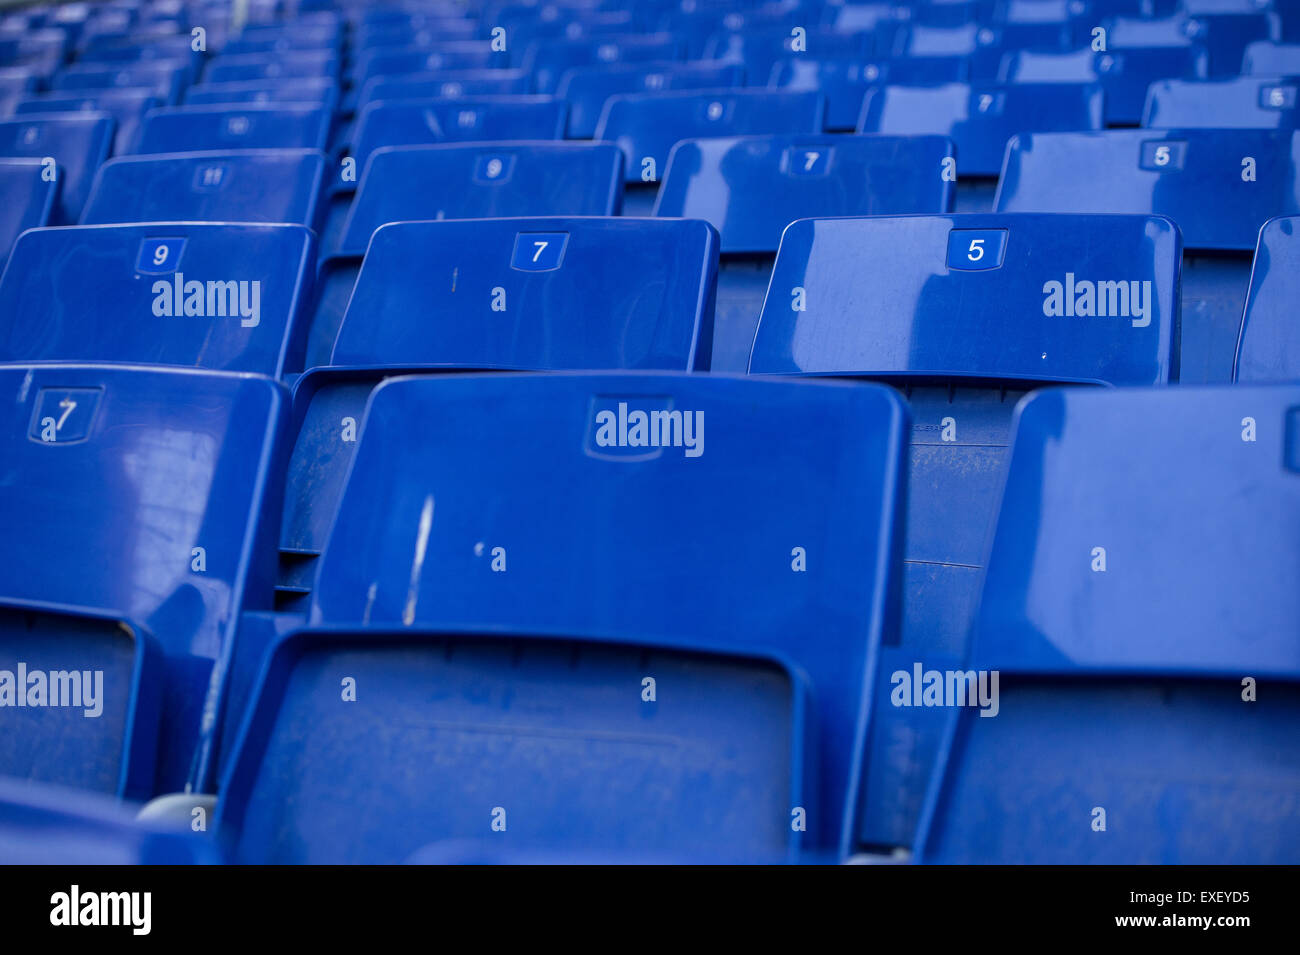 Empty blue seat of a football stadium Stock Photo